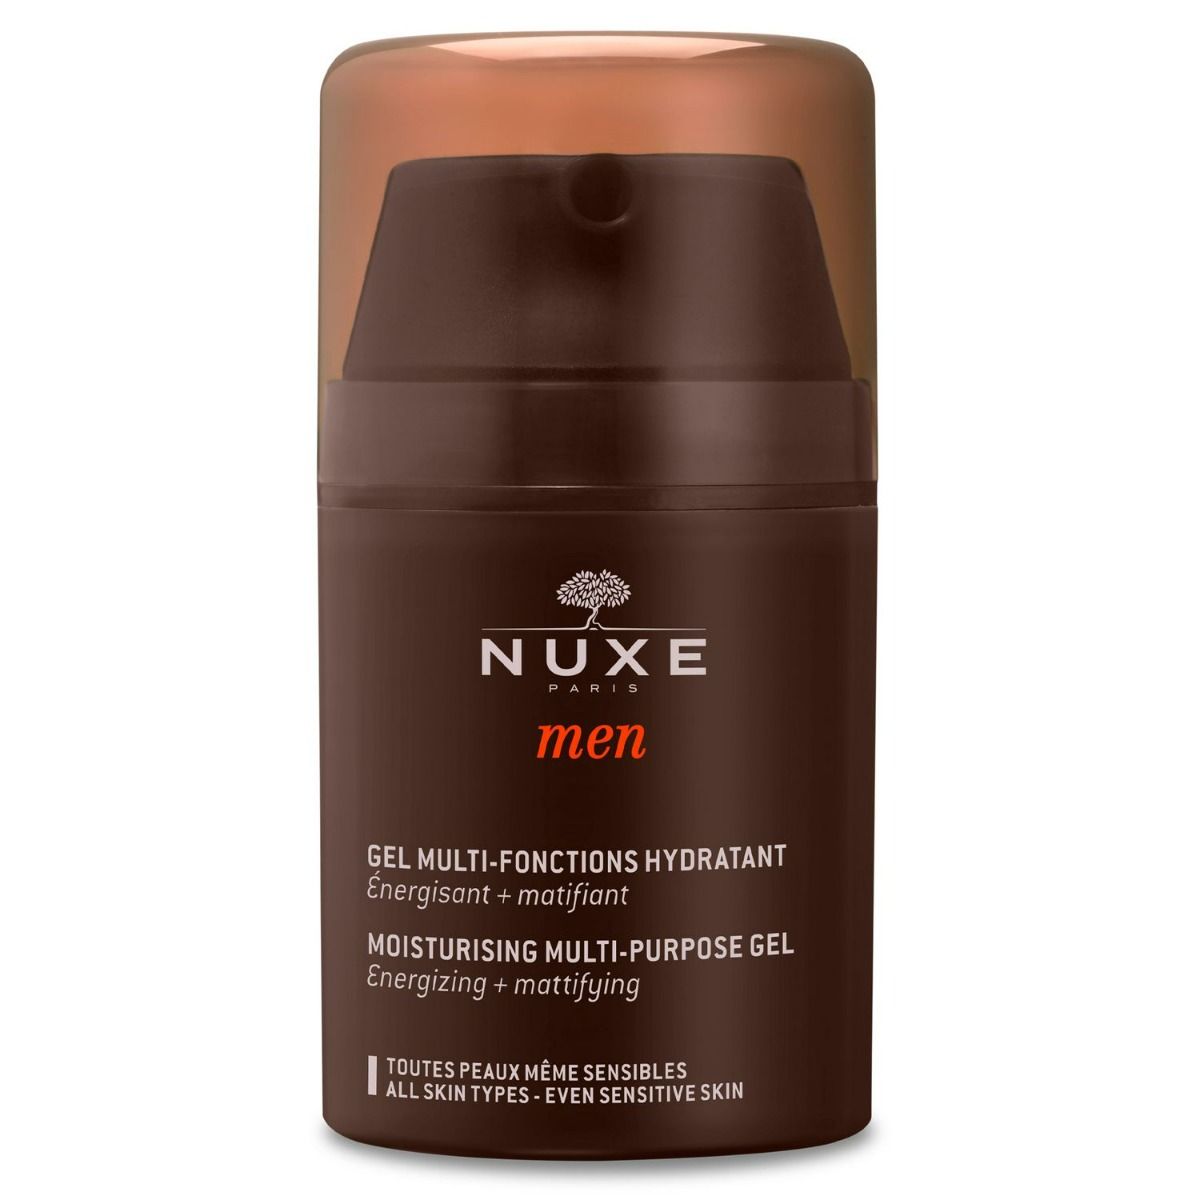 Nuxe Men гель для лица, 50 ml